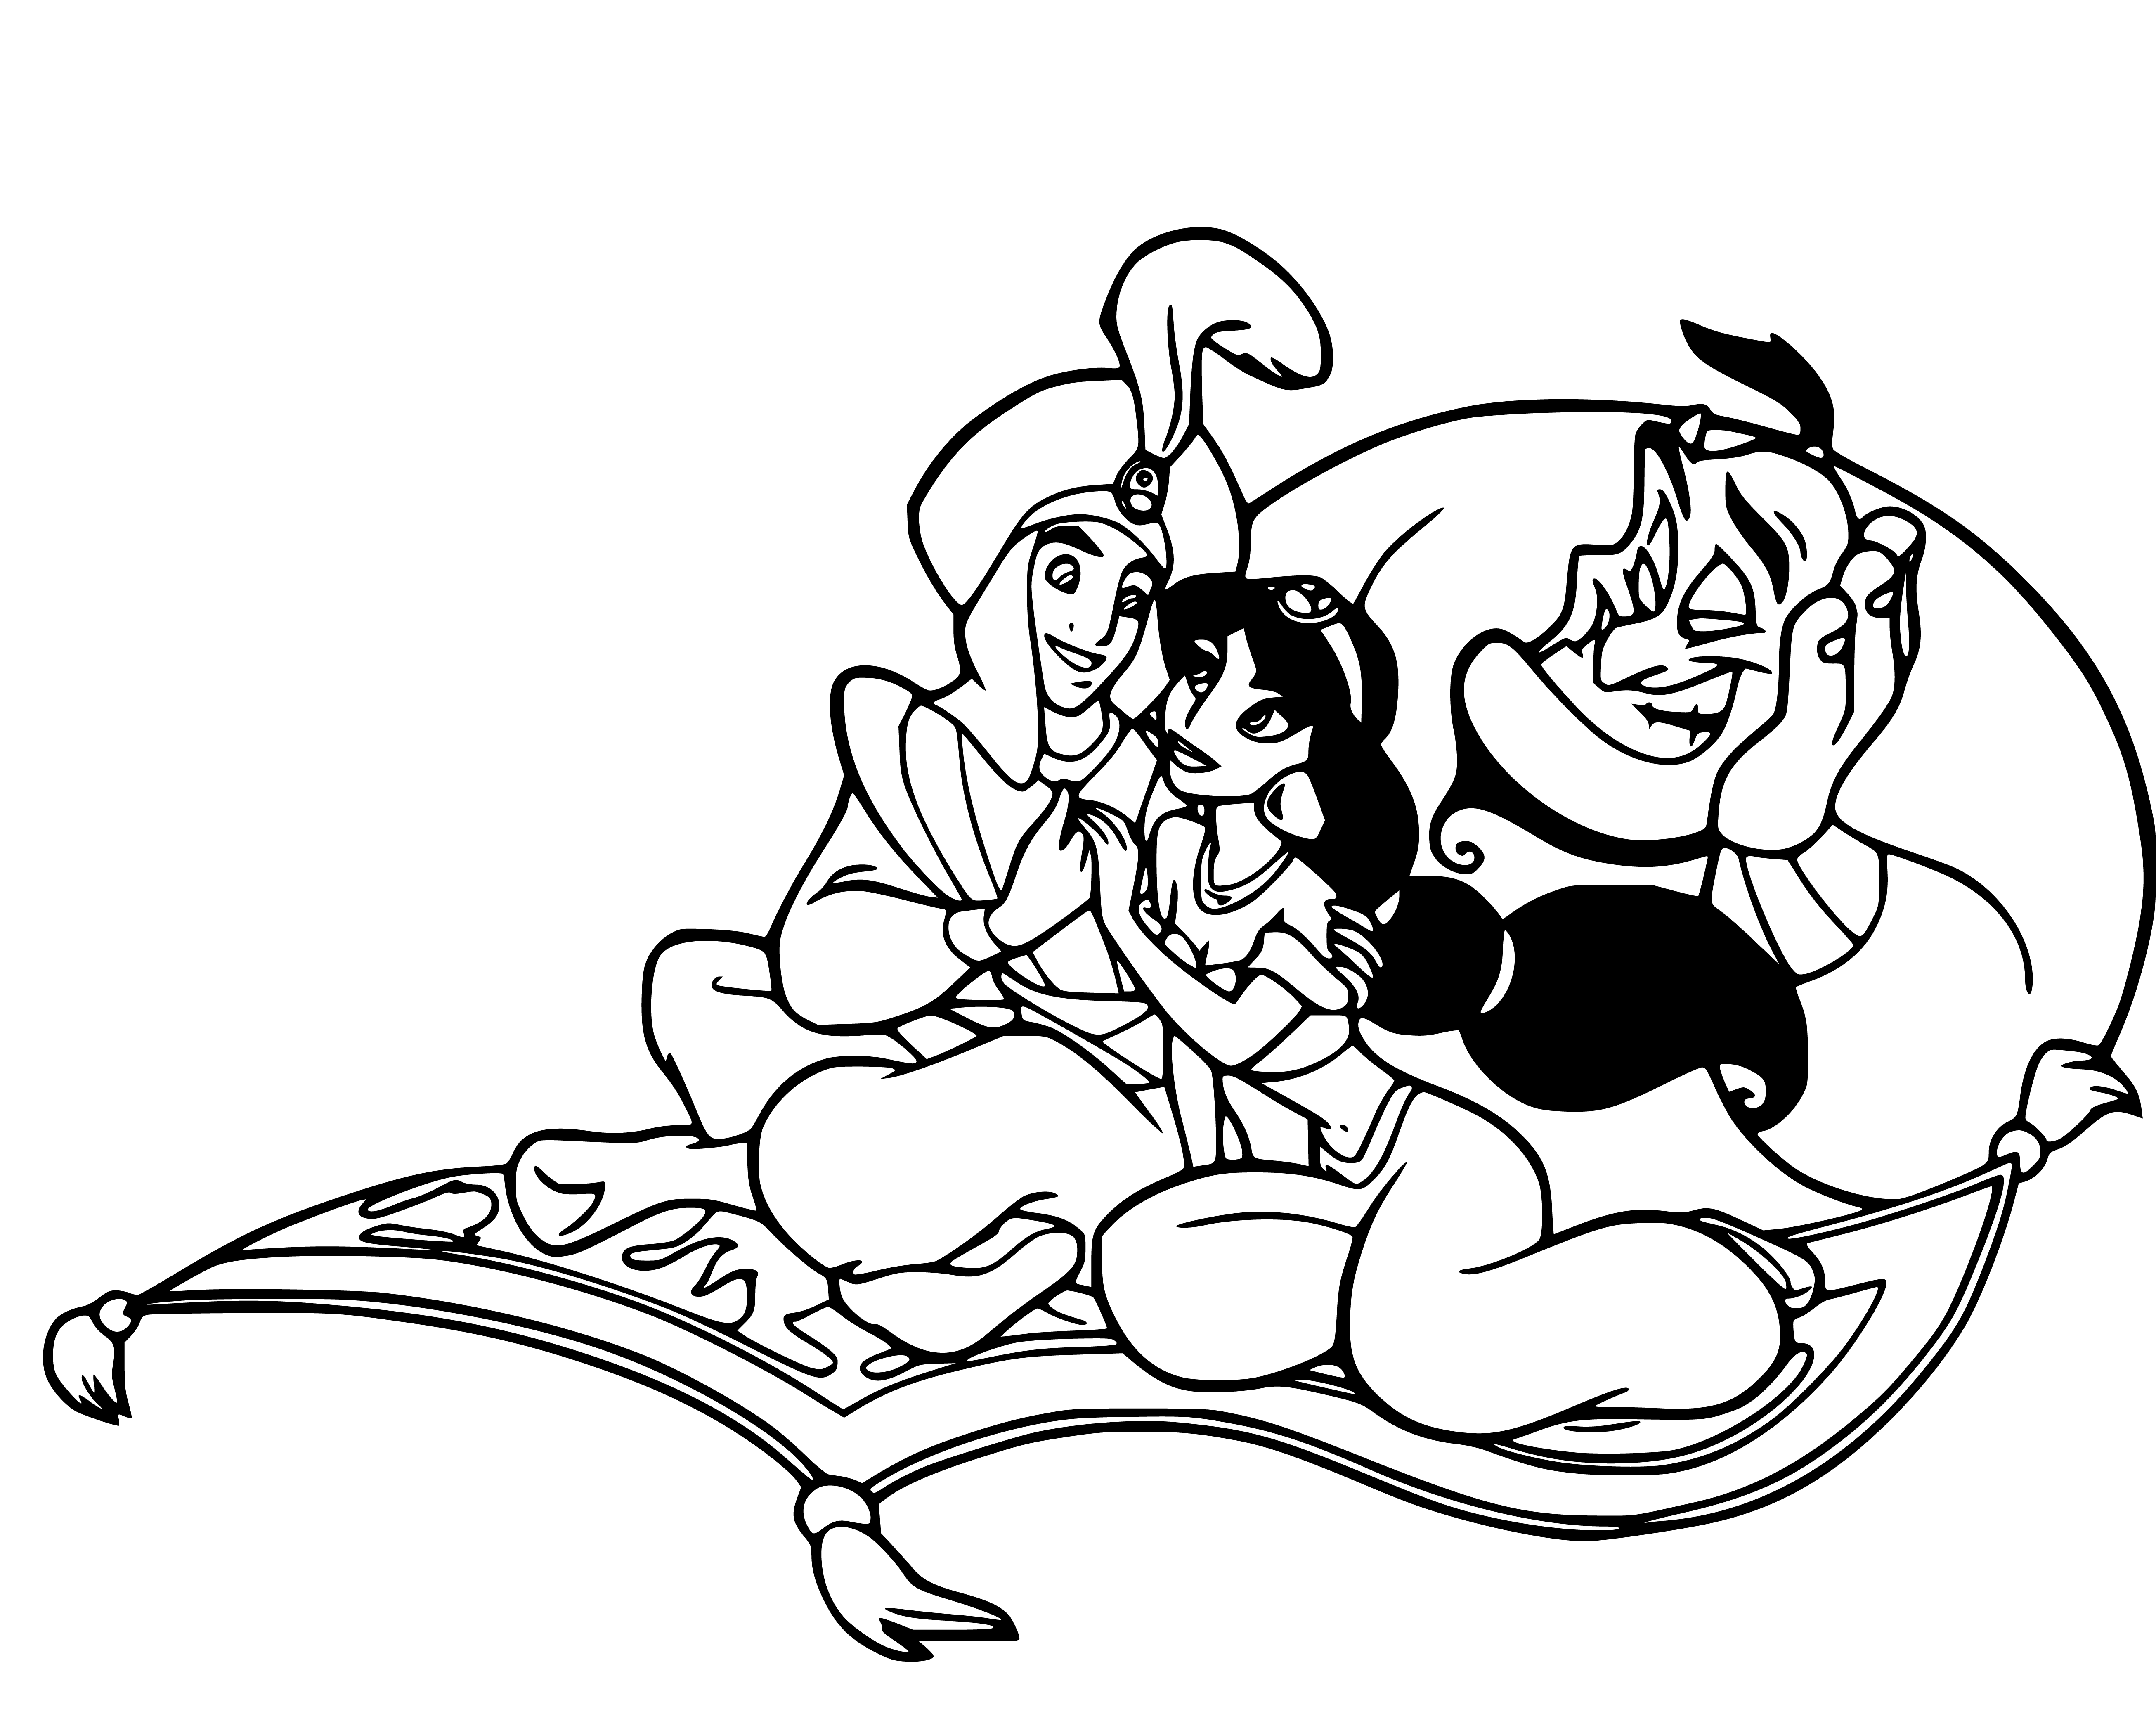 Aladdin, Jasmine and Genie Coloring Pages for Kids - SheetalColor.com